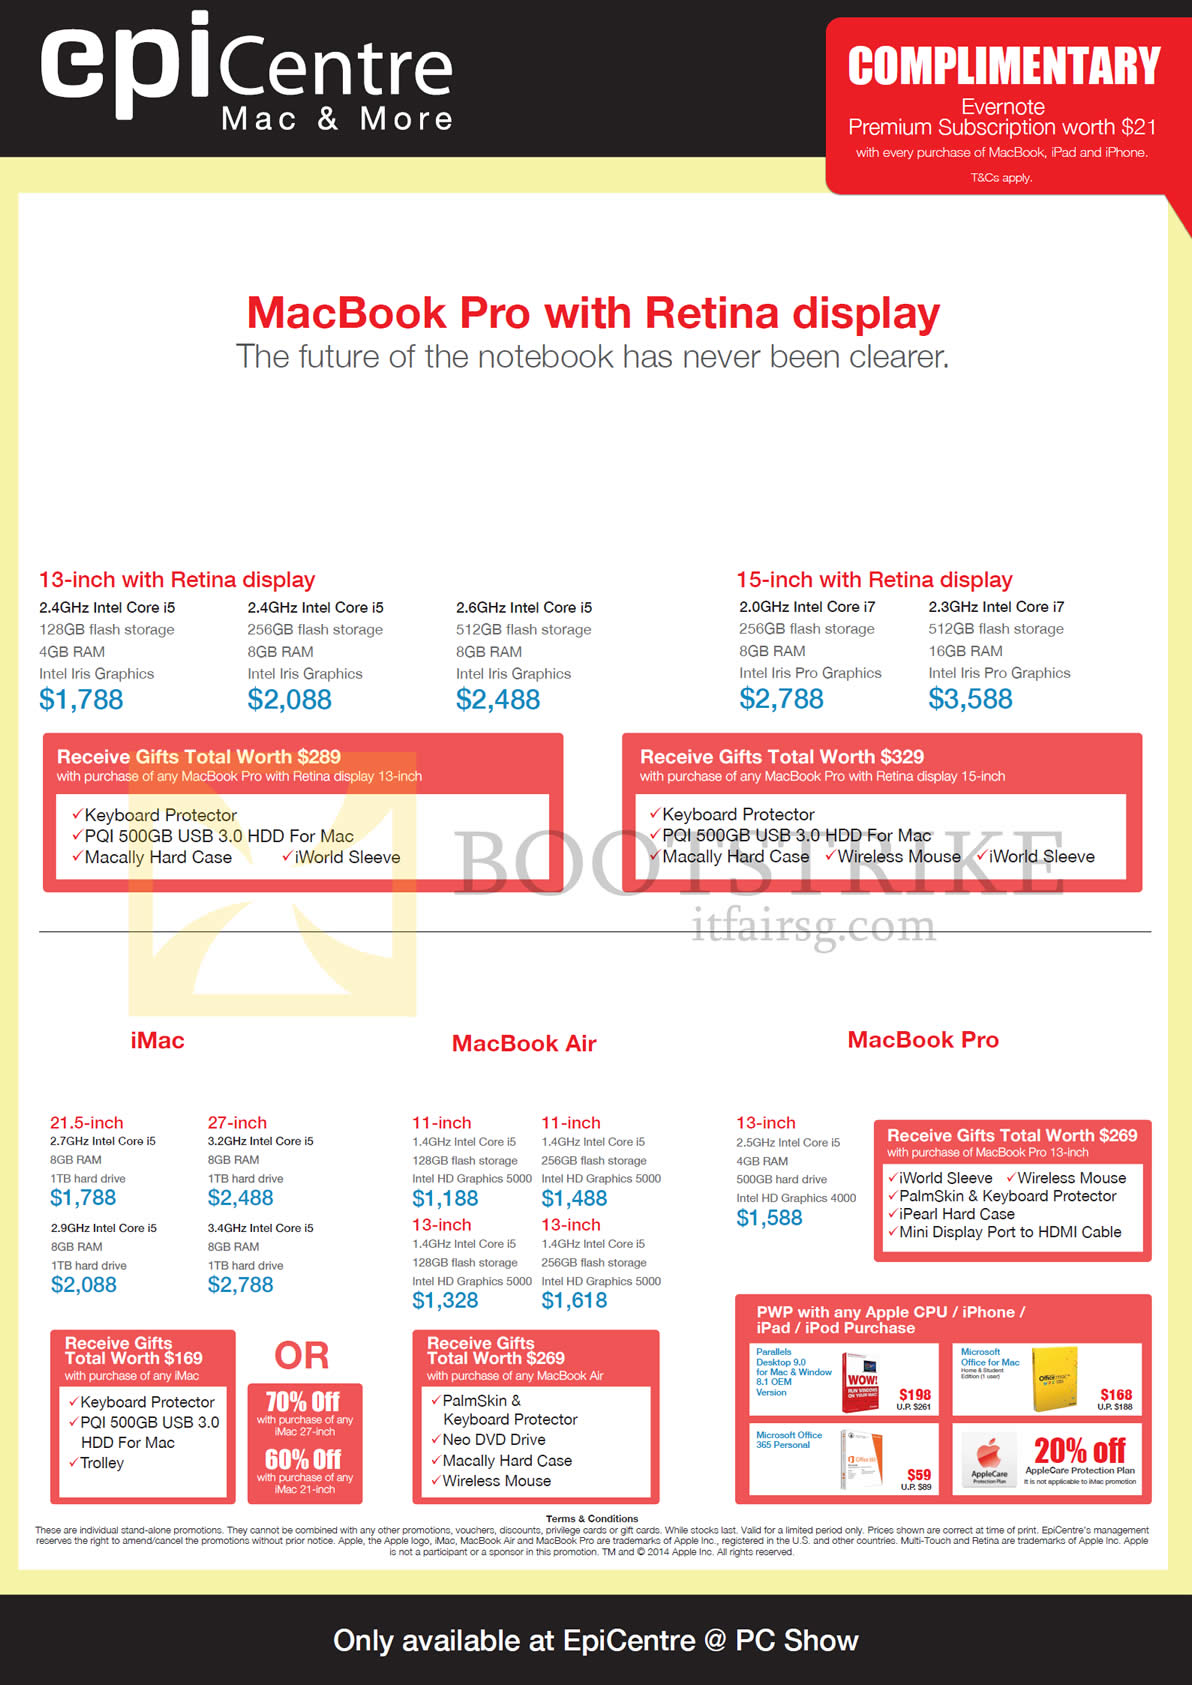 PC SHOW 2014 price list image brochure of EpiCentre Apple MacBook Pro Notebook, IMac Desktop PC, Macbook Air, Macbook Pro